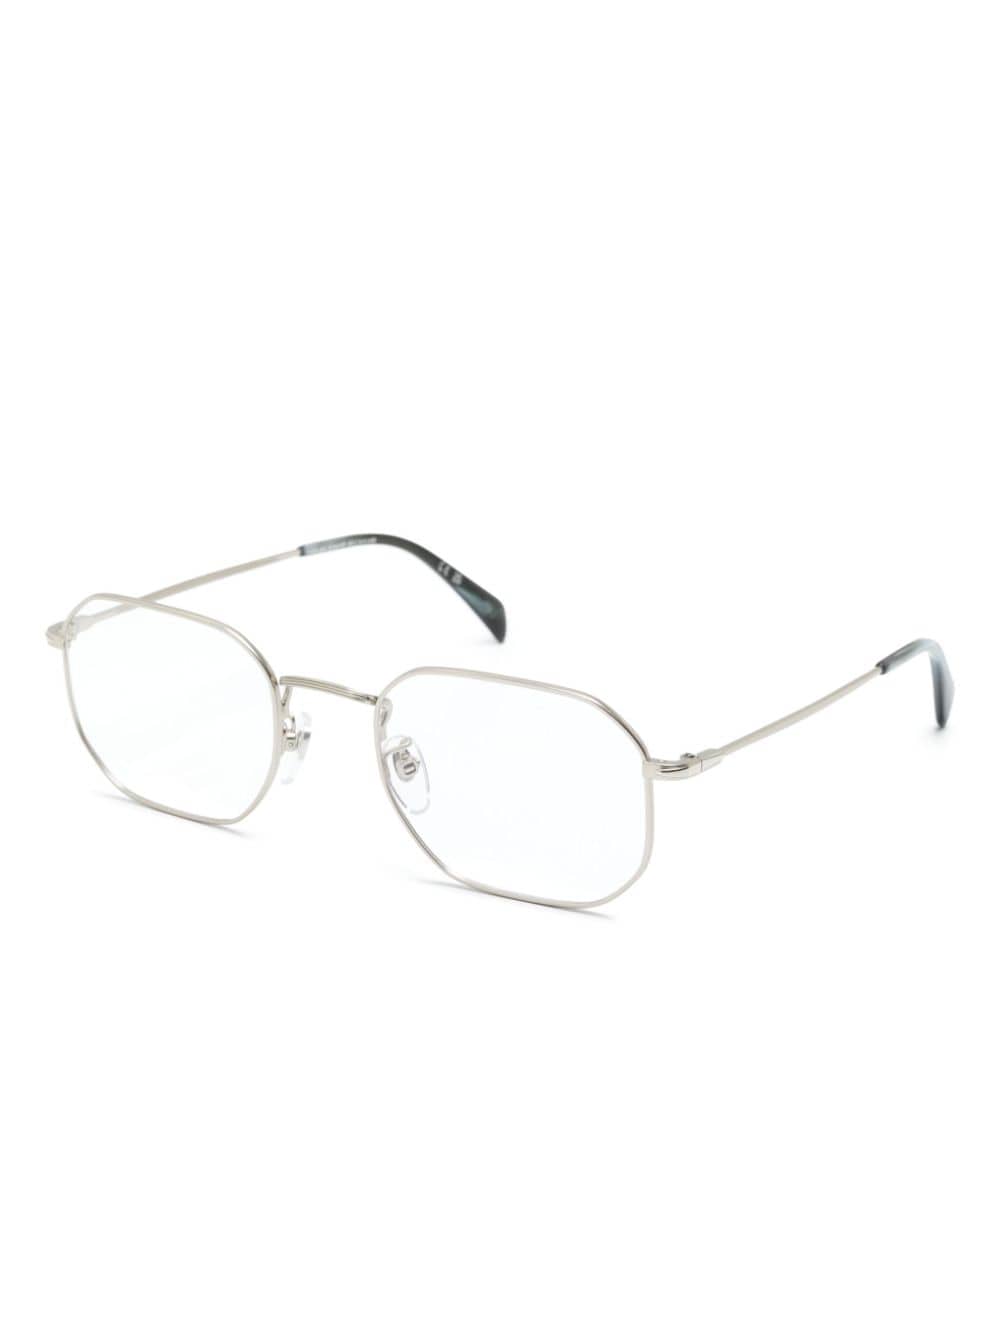 Image 2 of Eyewear by David Beckham geometric-frame glasses